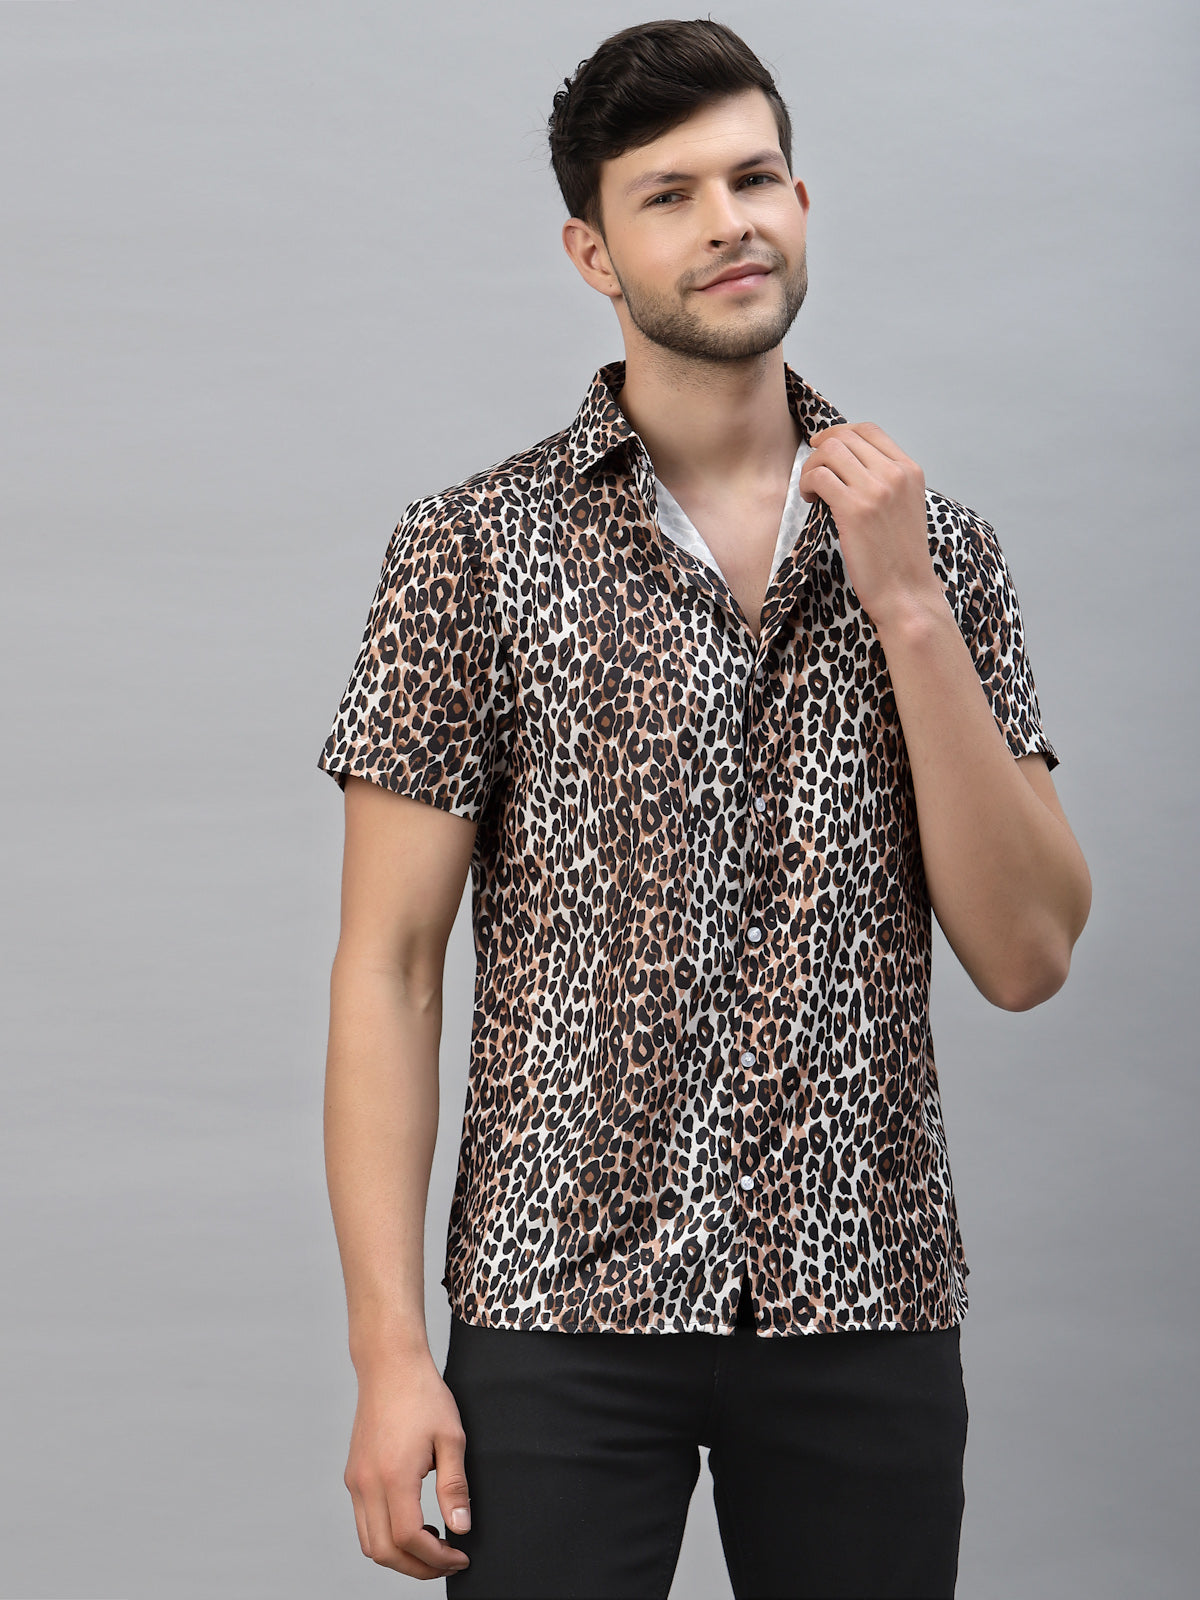 Cheeta Print Half Sleeve Shirt By Gavin Paris